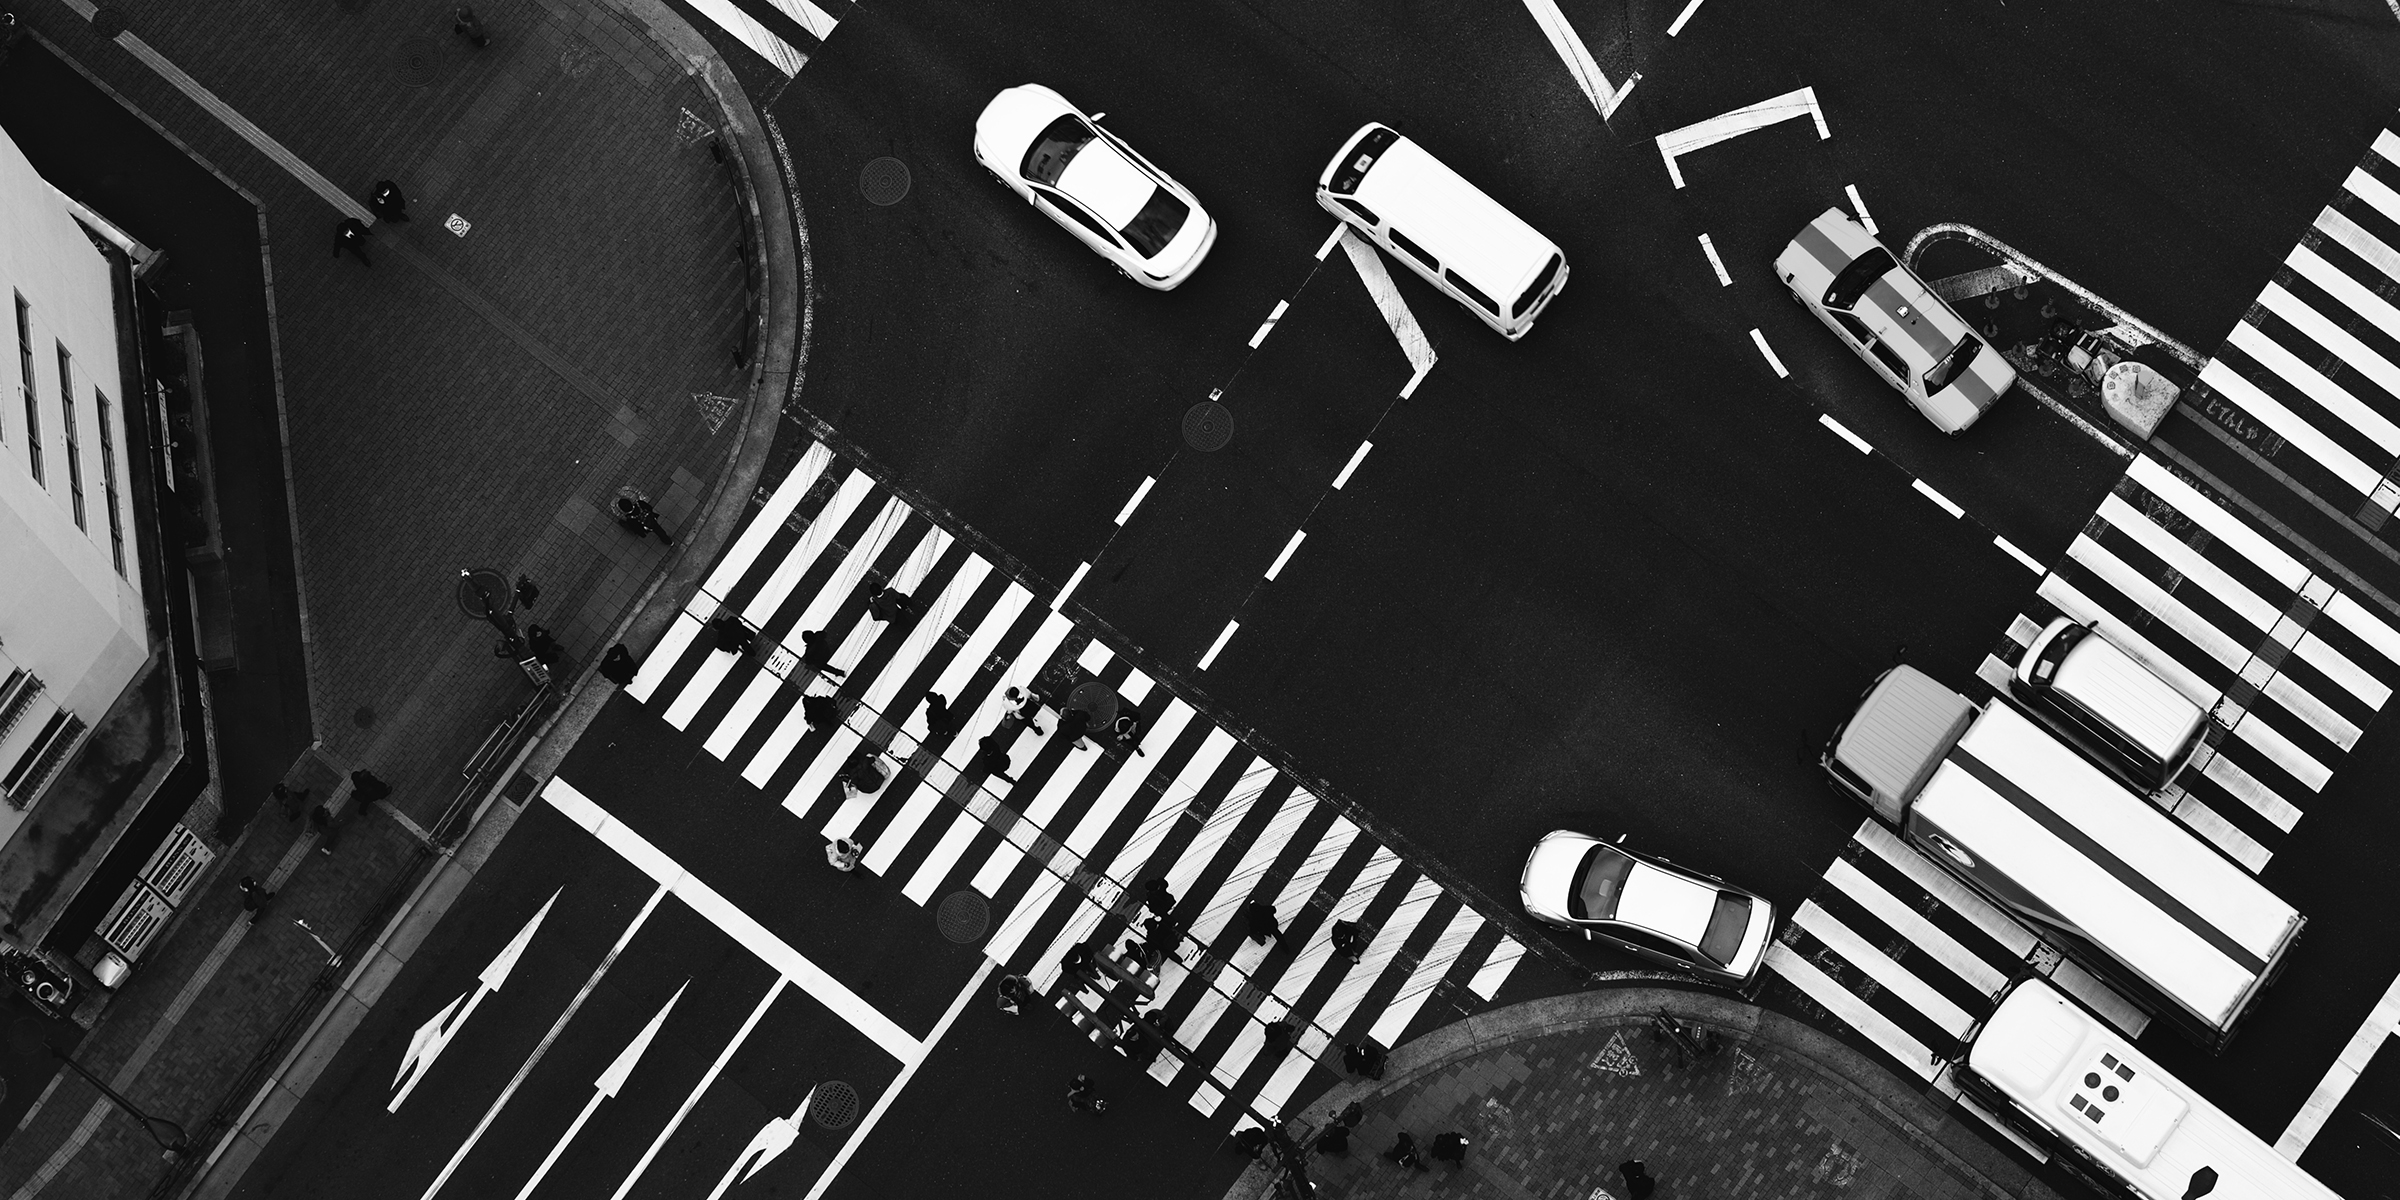 Birds-eye view of traffic on a street